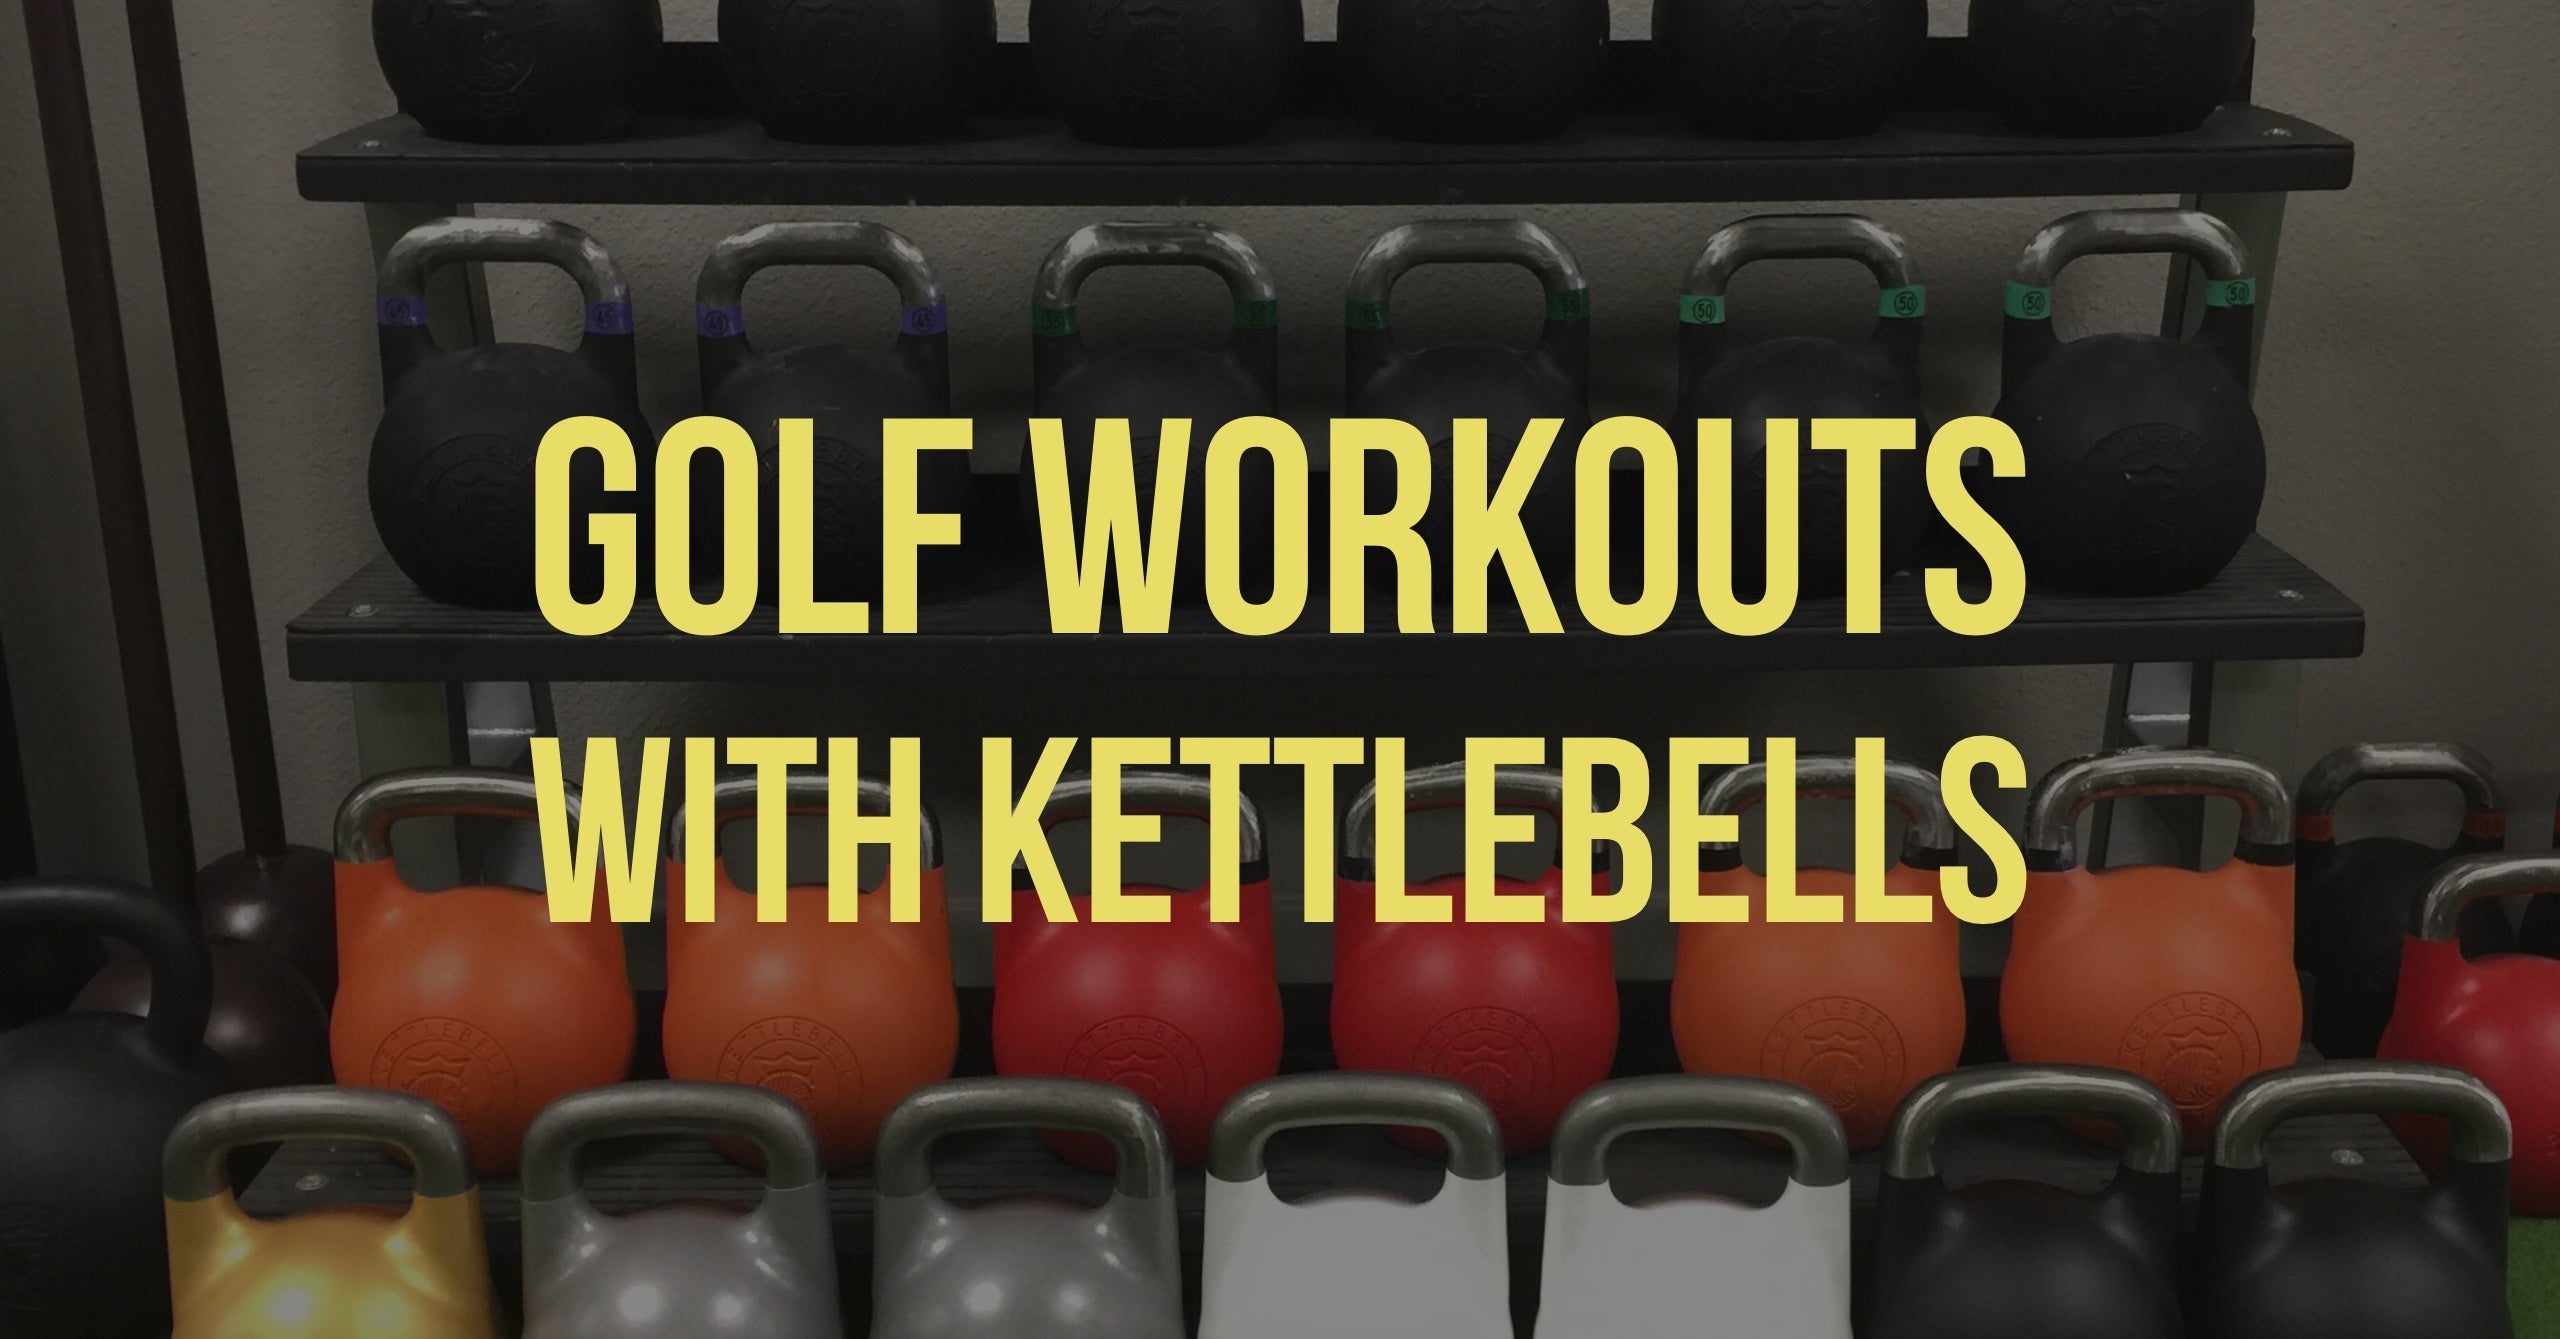 Kettlebell Workouts For Golf Part 2: Kettlebell Halo